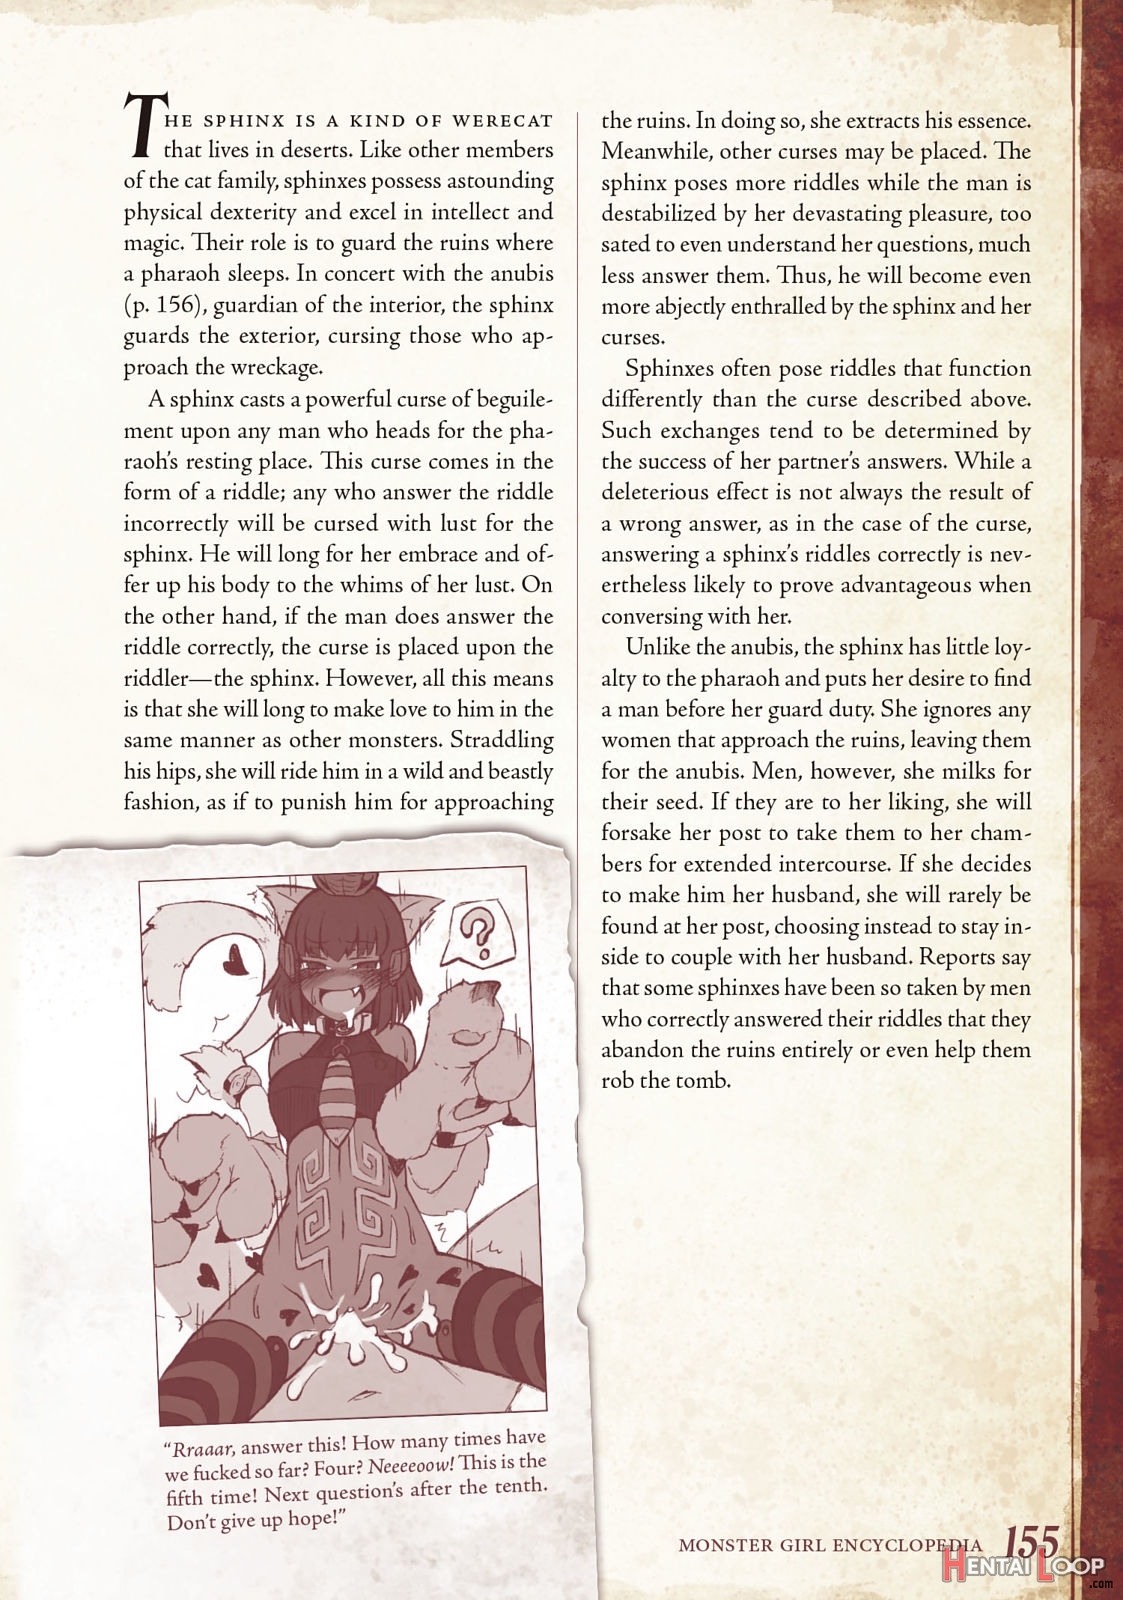 Monster Girl Encyclopedia Vol. 1 page 156